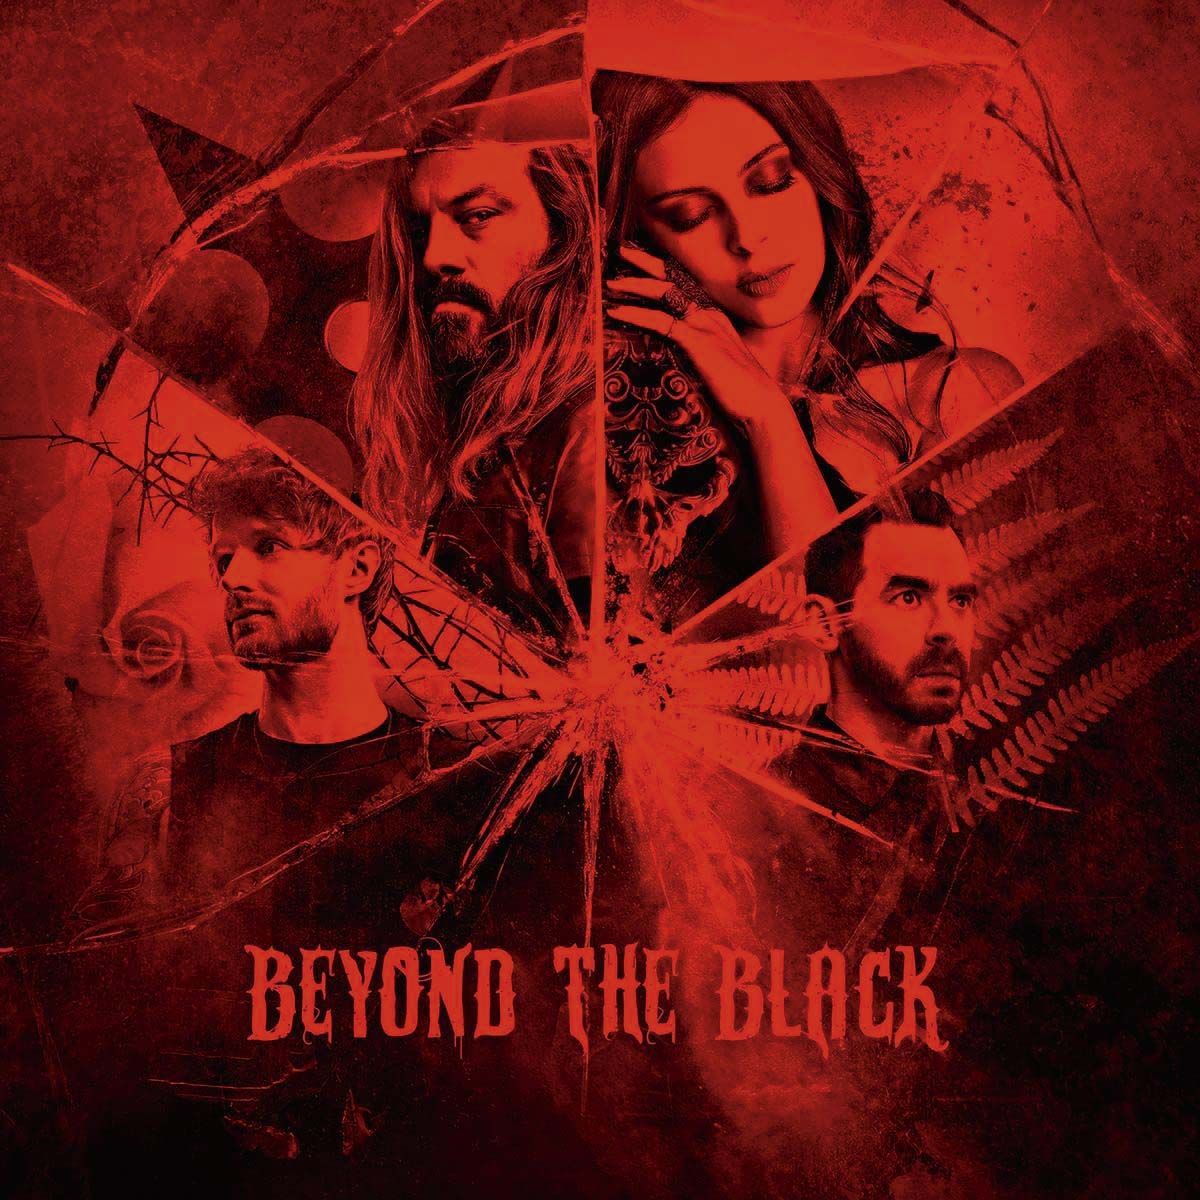 Beyond The Black - Beyond The Black